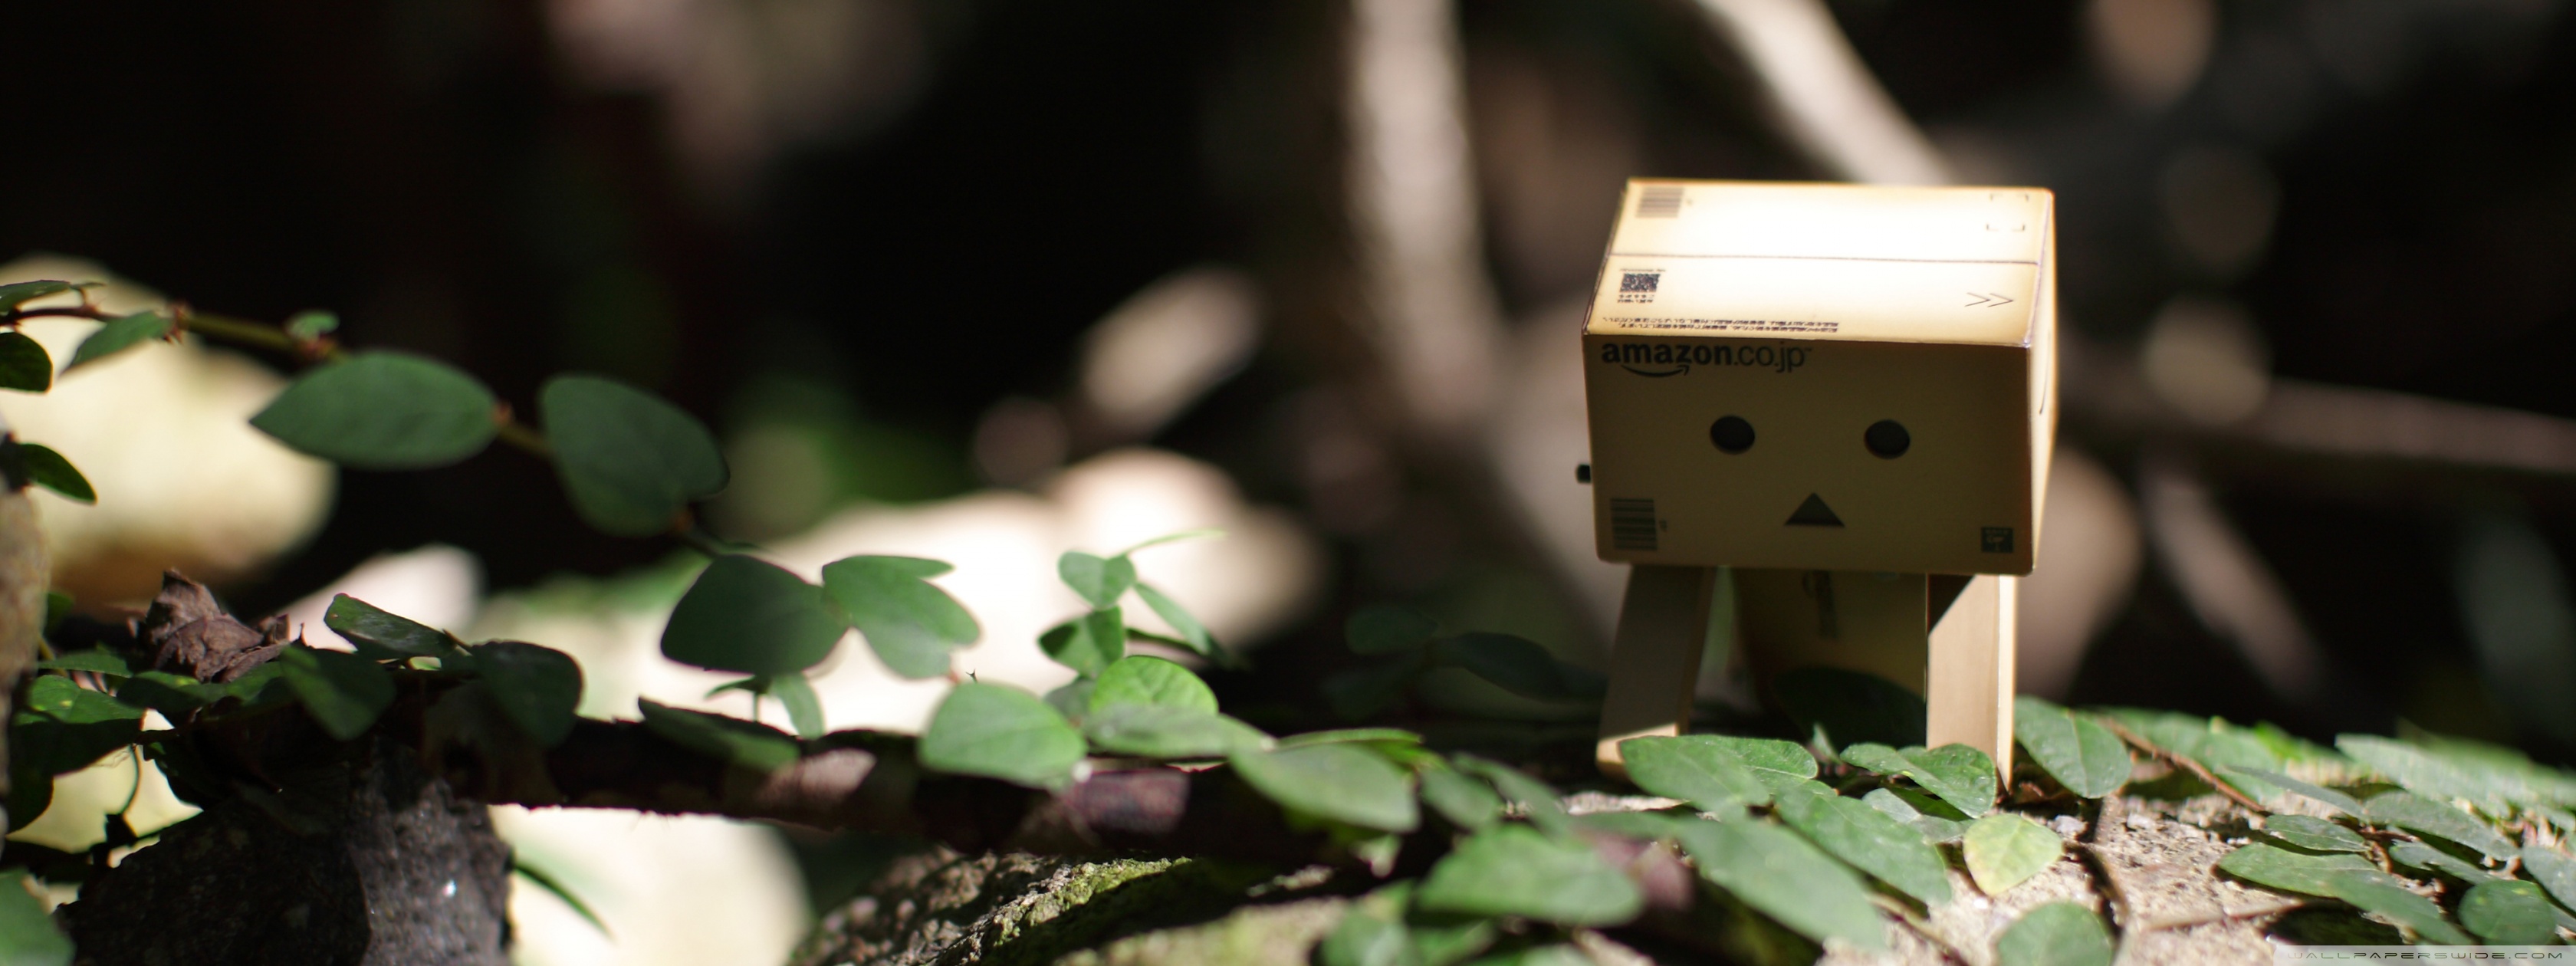 Download 21 cute-box-robot-wallpaper Sad-Boxman-Wallpaper-Full-Hd-Amazon-Robot-Sad-Free-.jpg